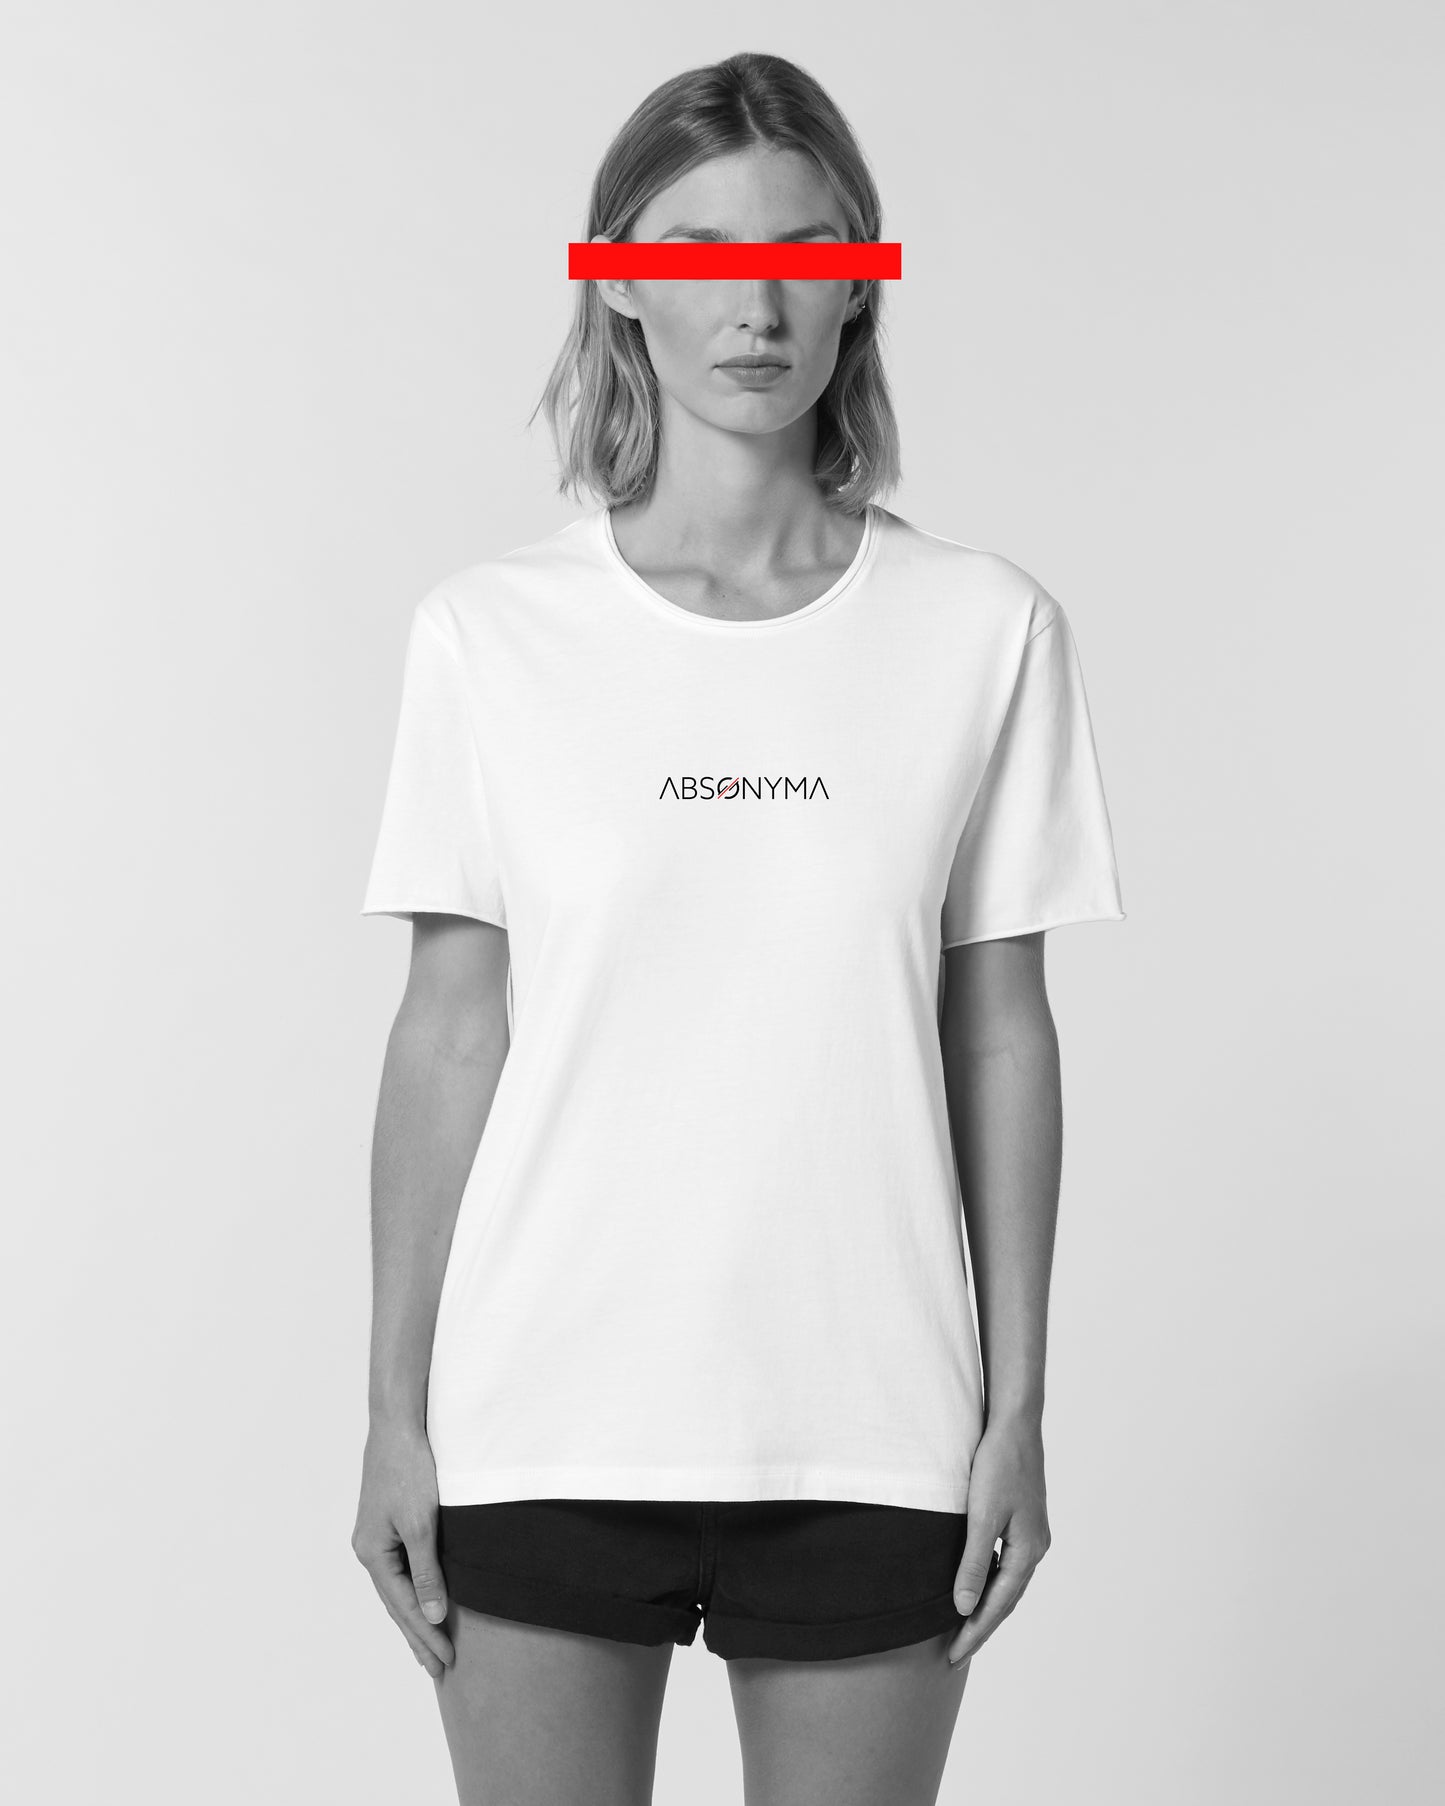 "Absonyma Name" - Raw Edges Unisex T-shirt